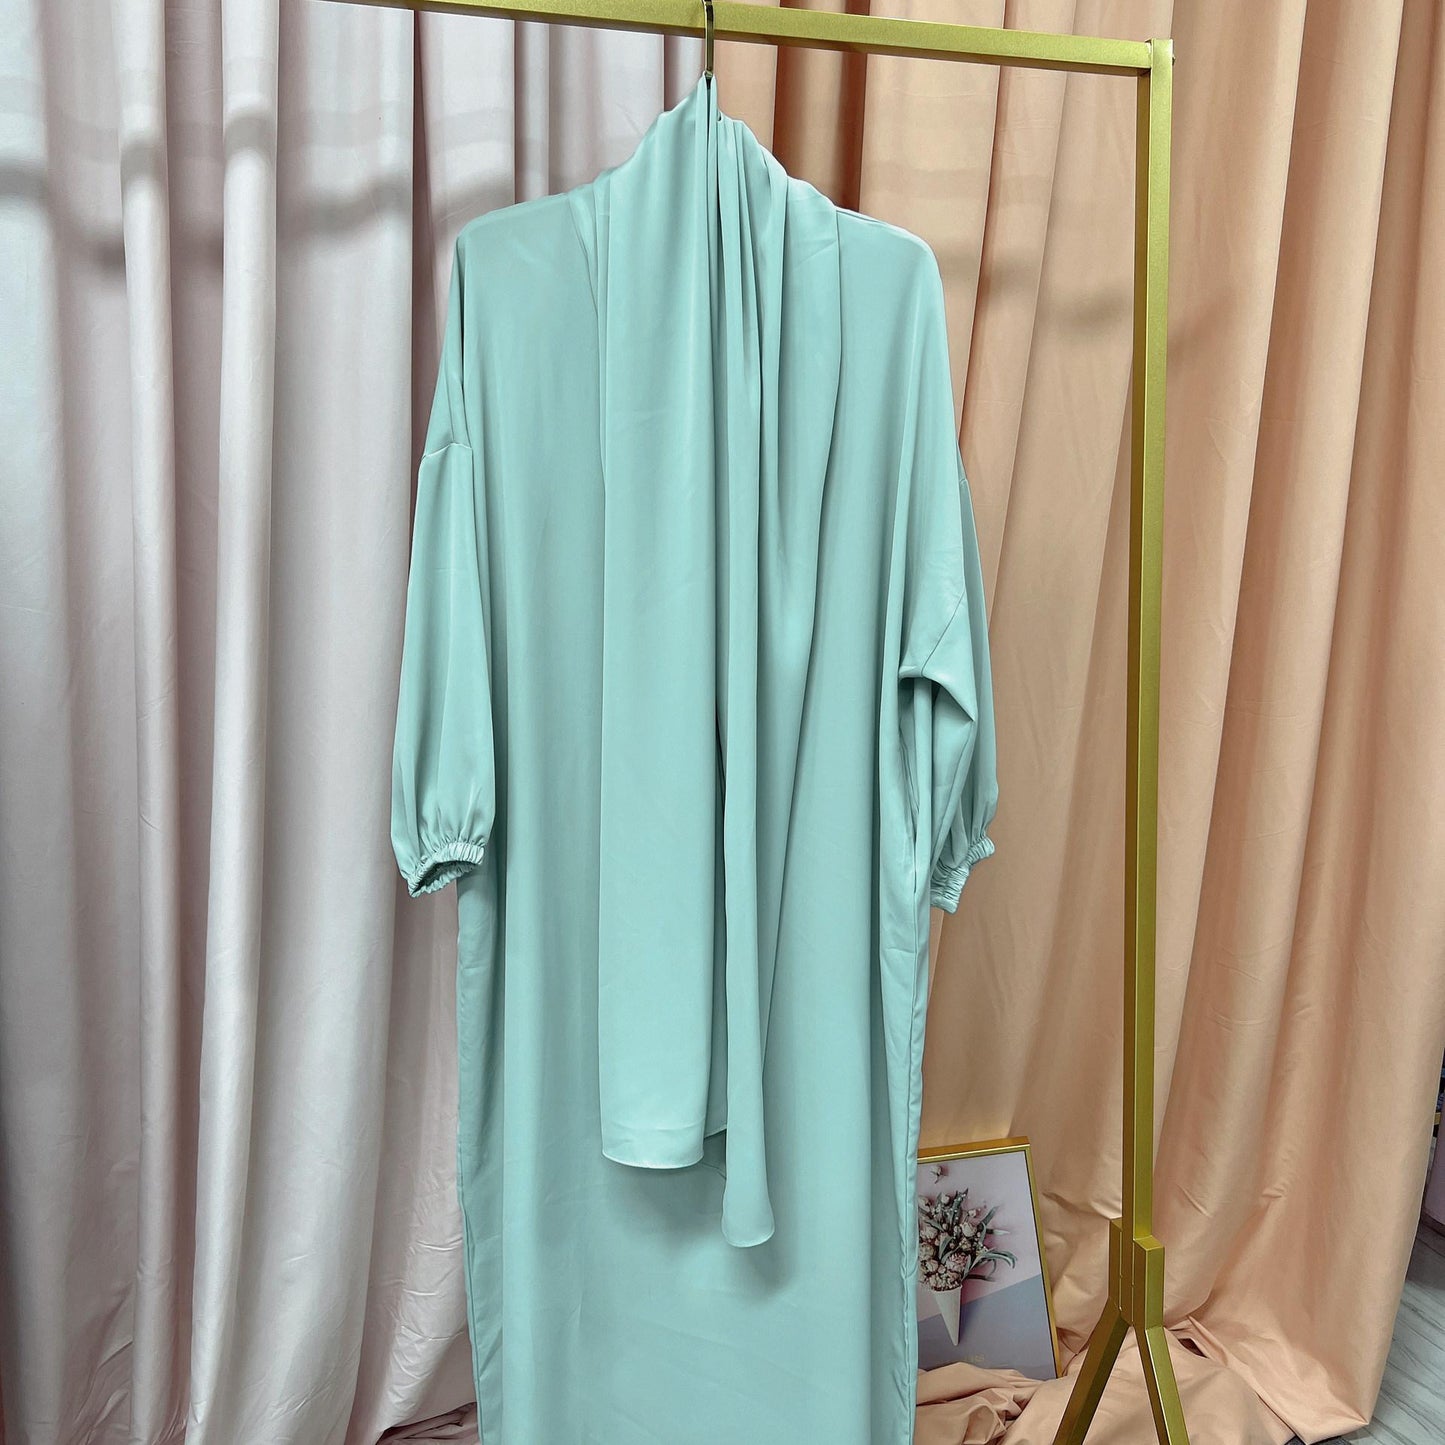 HS10049  New Middle East Dubai Turkish Robe Dress with Hijab hoody abaya